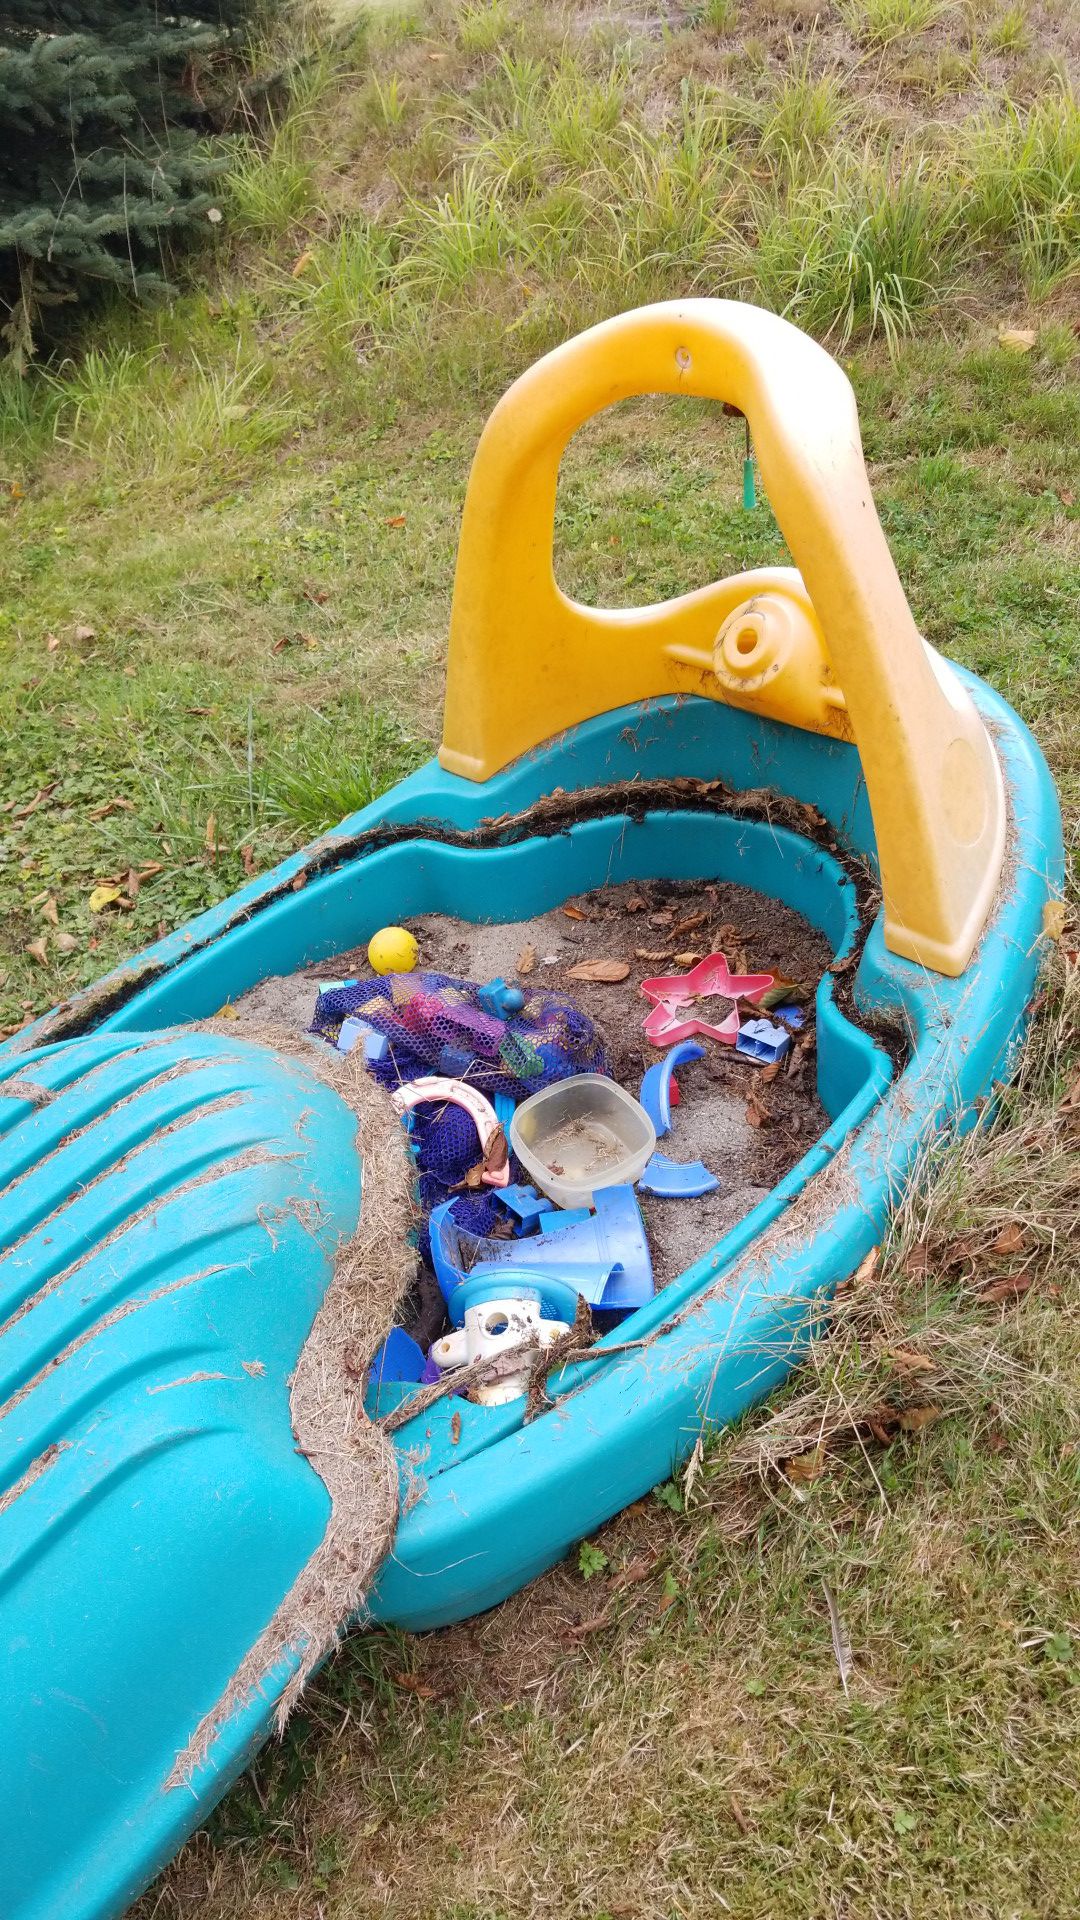 Little Tykes tugboat sandbox/water toy vintage